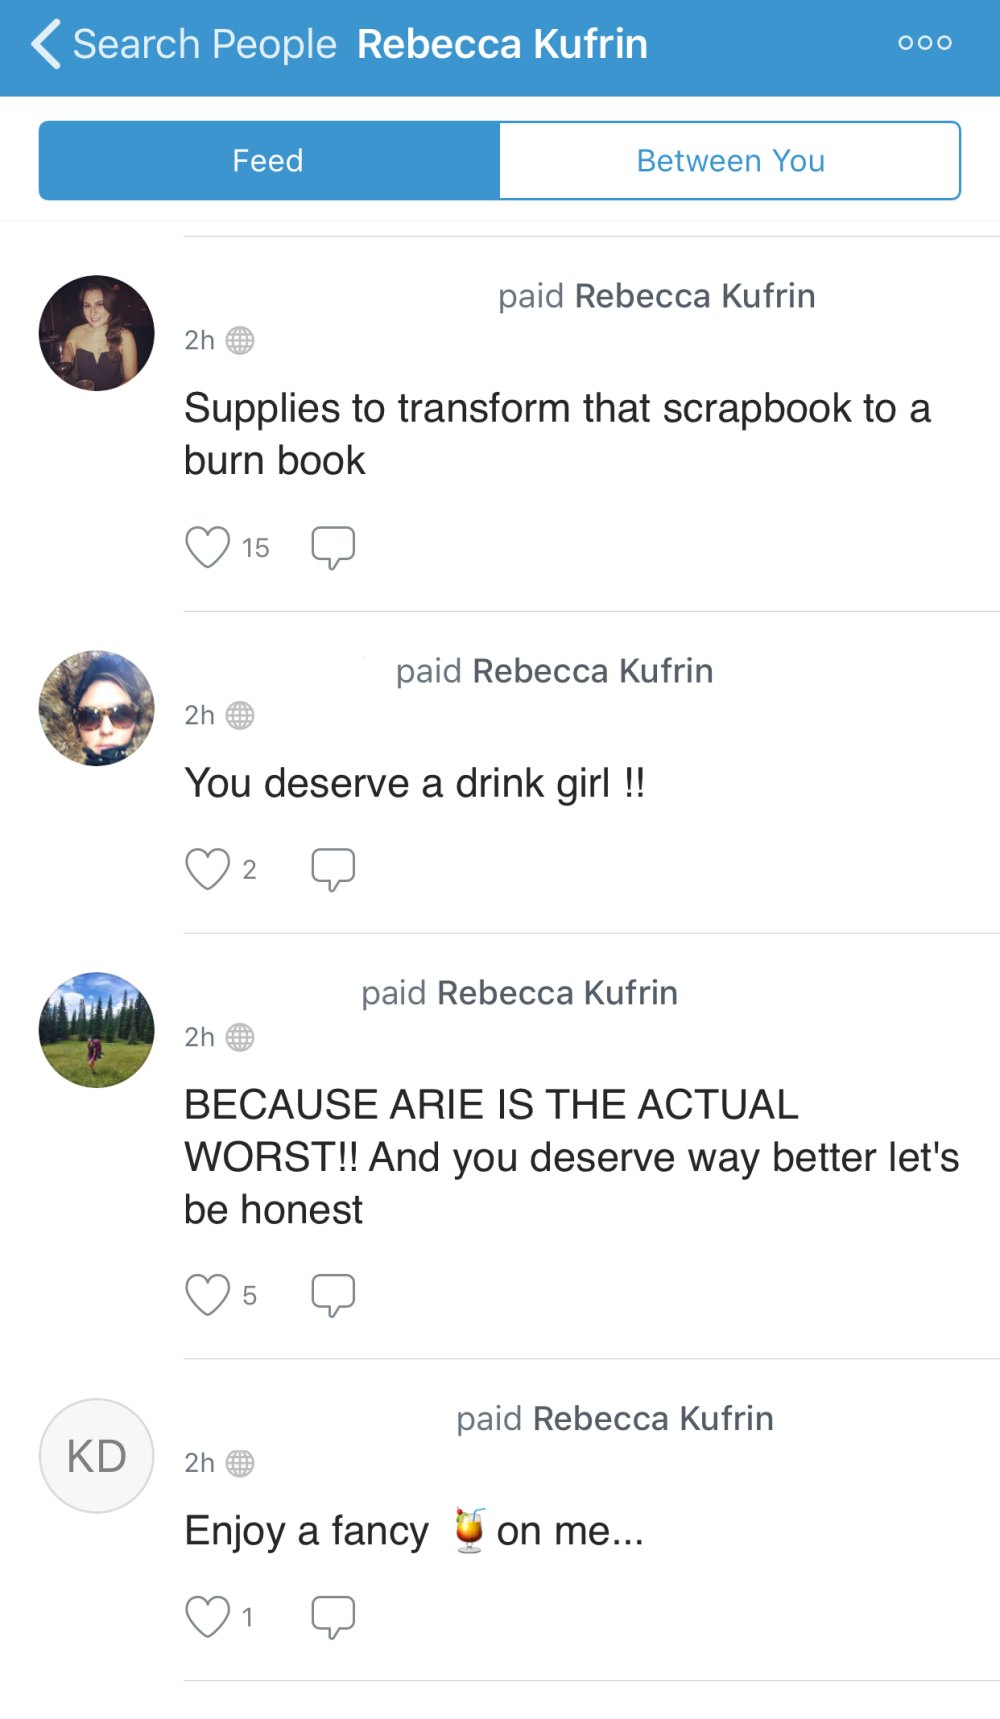 Rebecca Kufrin's vemo account, money donations for wine